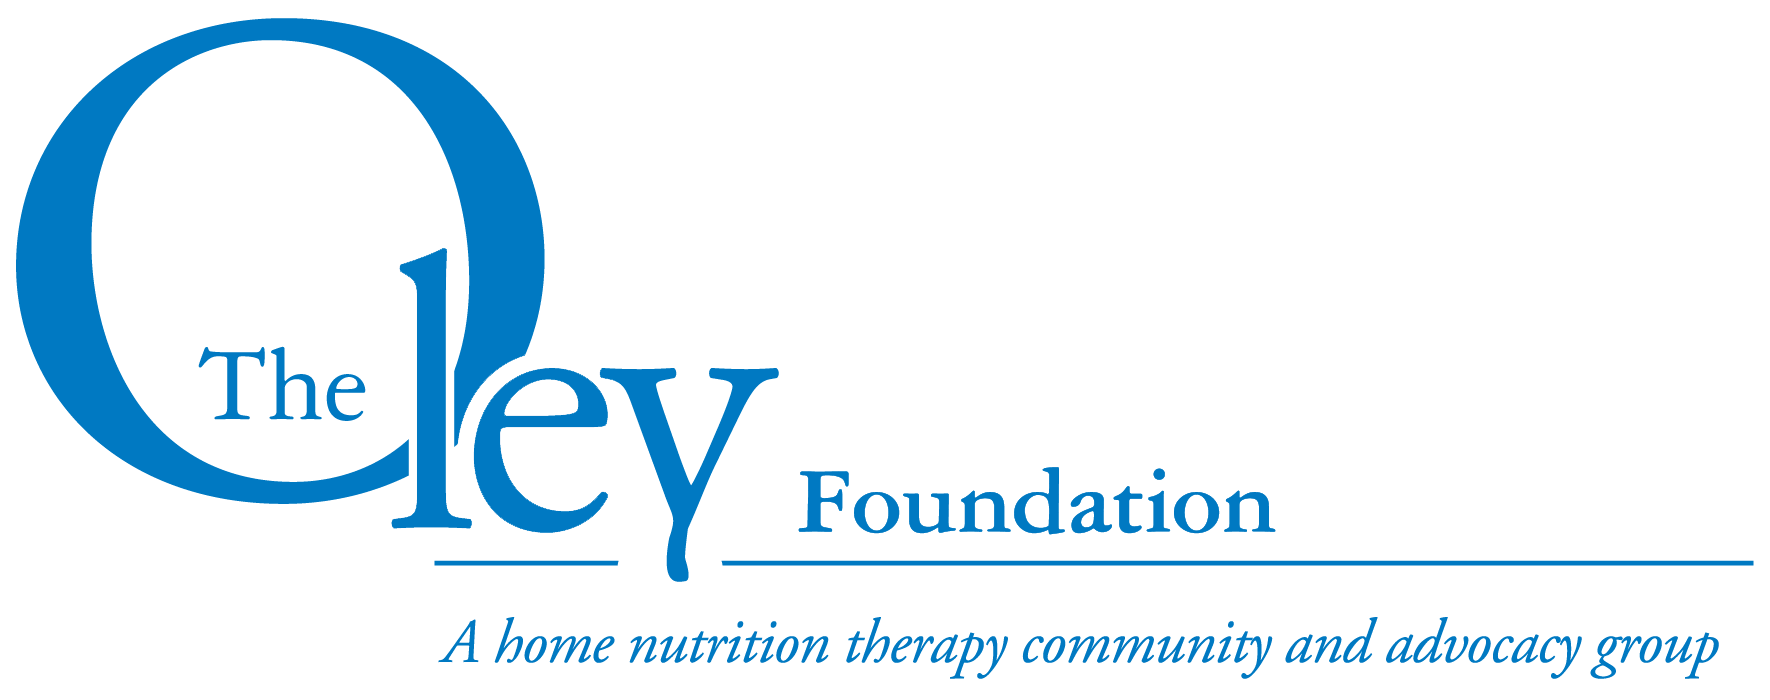 The Oley Foundation